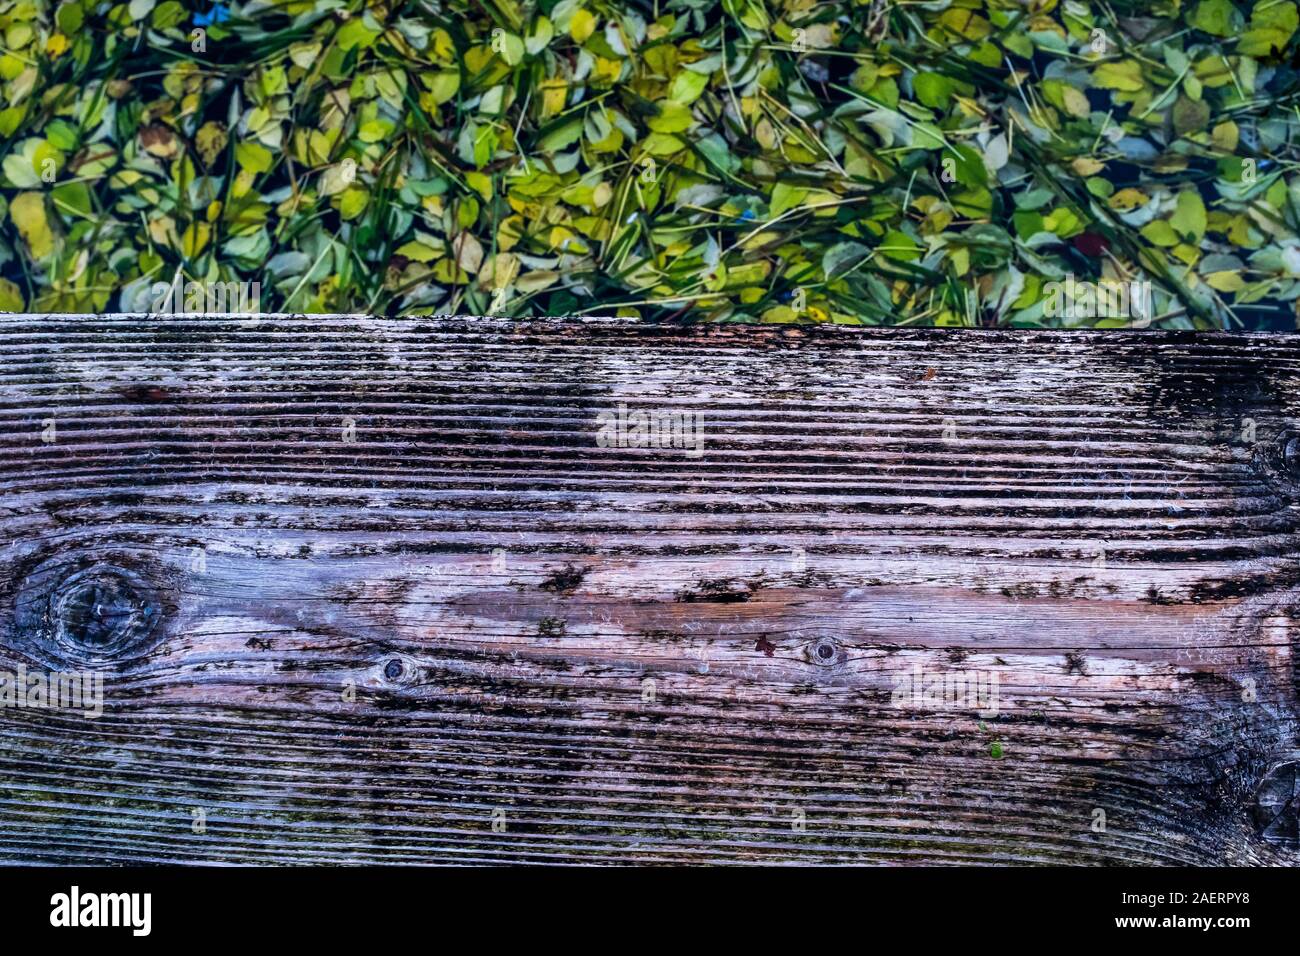 A partir de un sendero de madera, una mirada de cerca a una alfombra gruesa de hojas pads flotando sobre el agua del lago. Centrarse en primer plano en la plancha de madera. Foto de stock